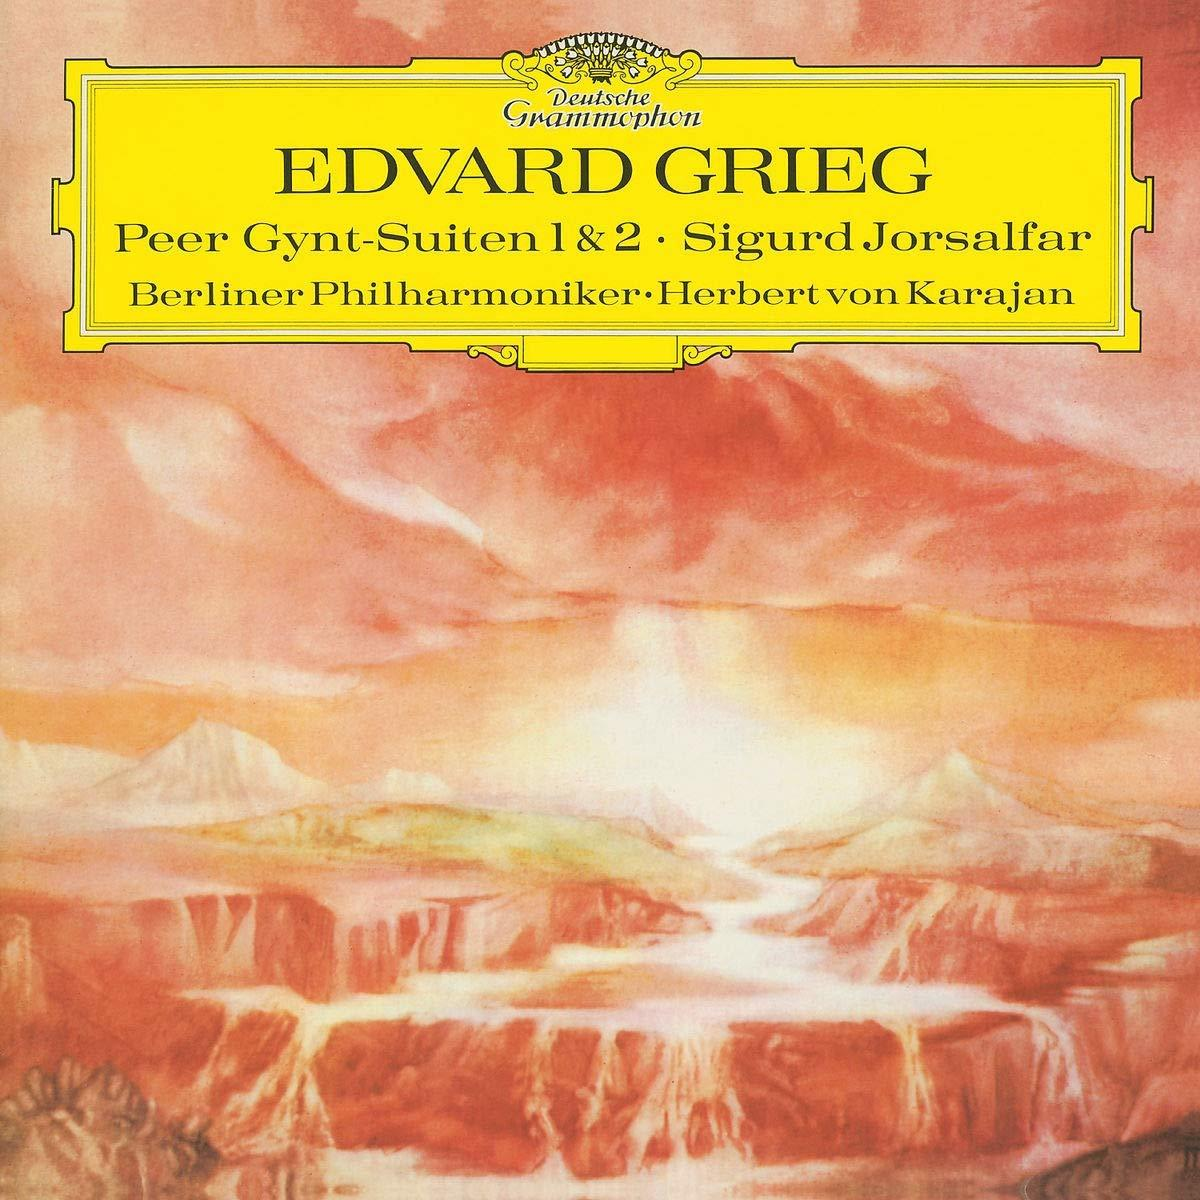 JORSALFAR Philharmoniker Berliner SIGURD GYNT (Vinyl) SUITEN - 1&2 PEER -